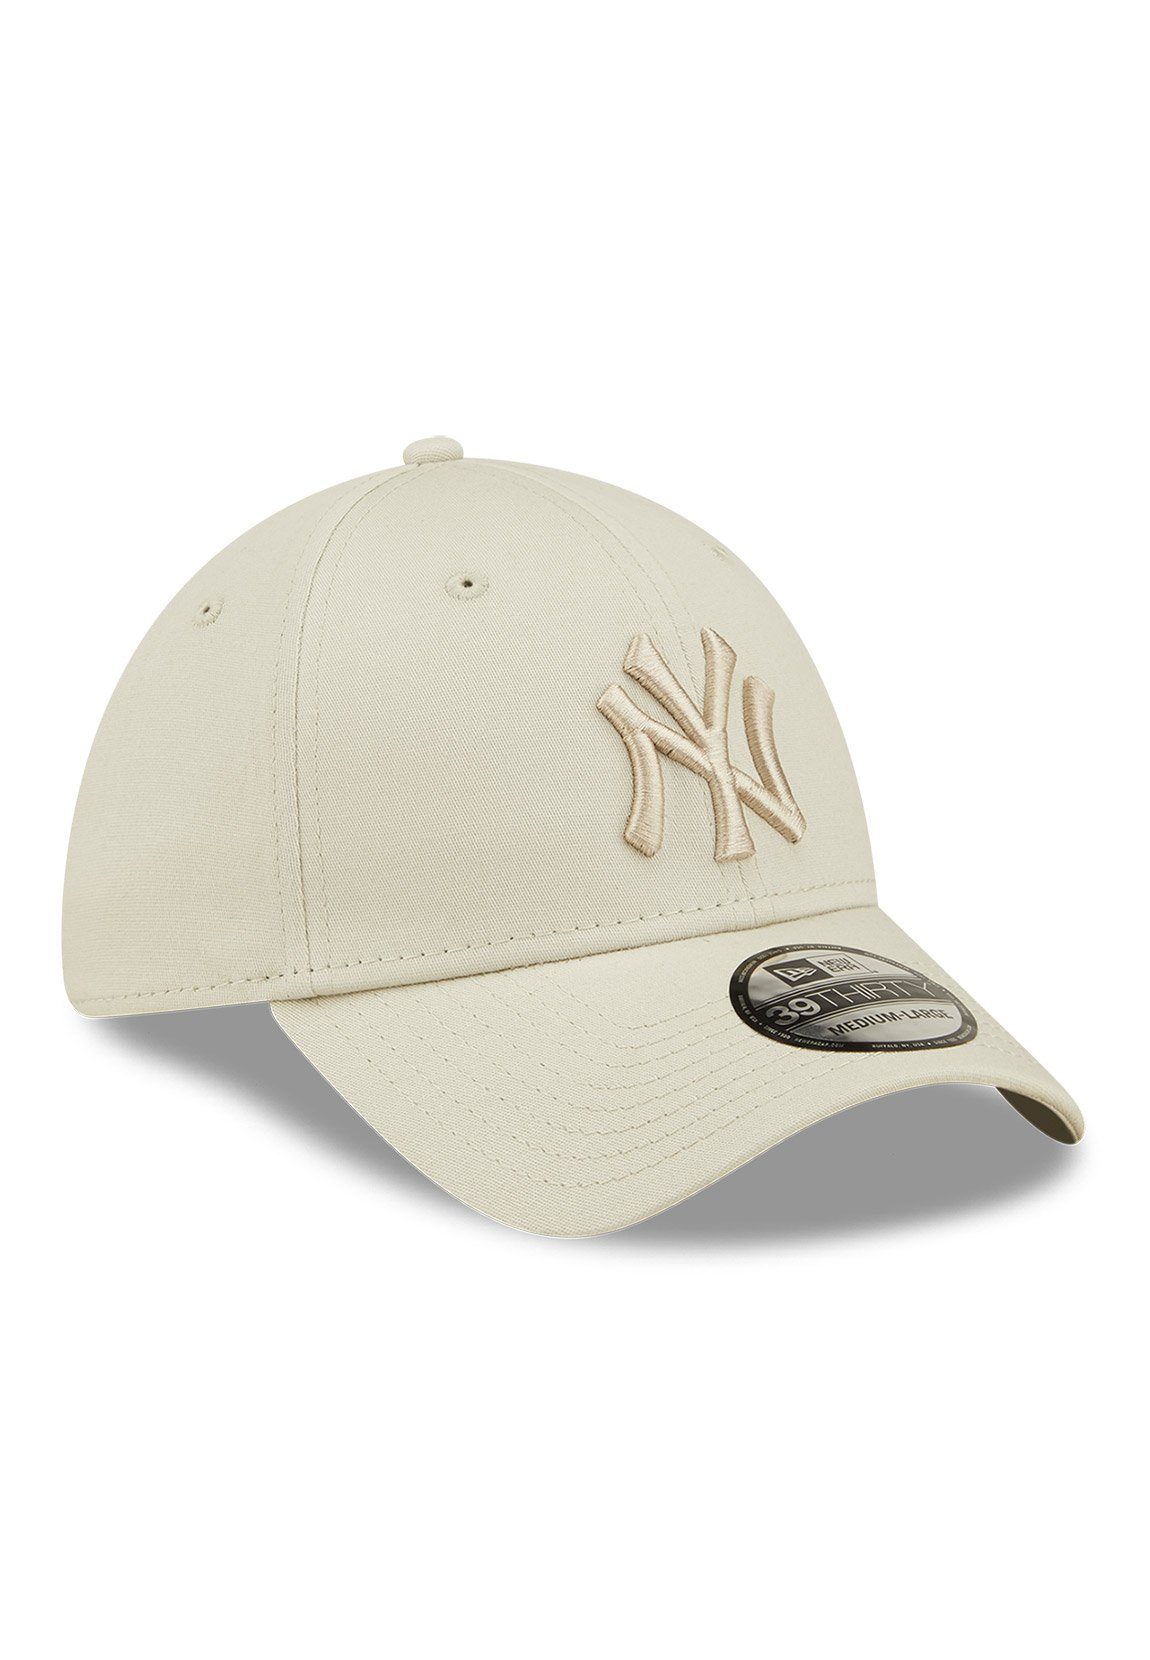 Beige New Baseball Essential Cap League Era hellbeige YANKEES NY New 39Thirty Cap Era